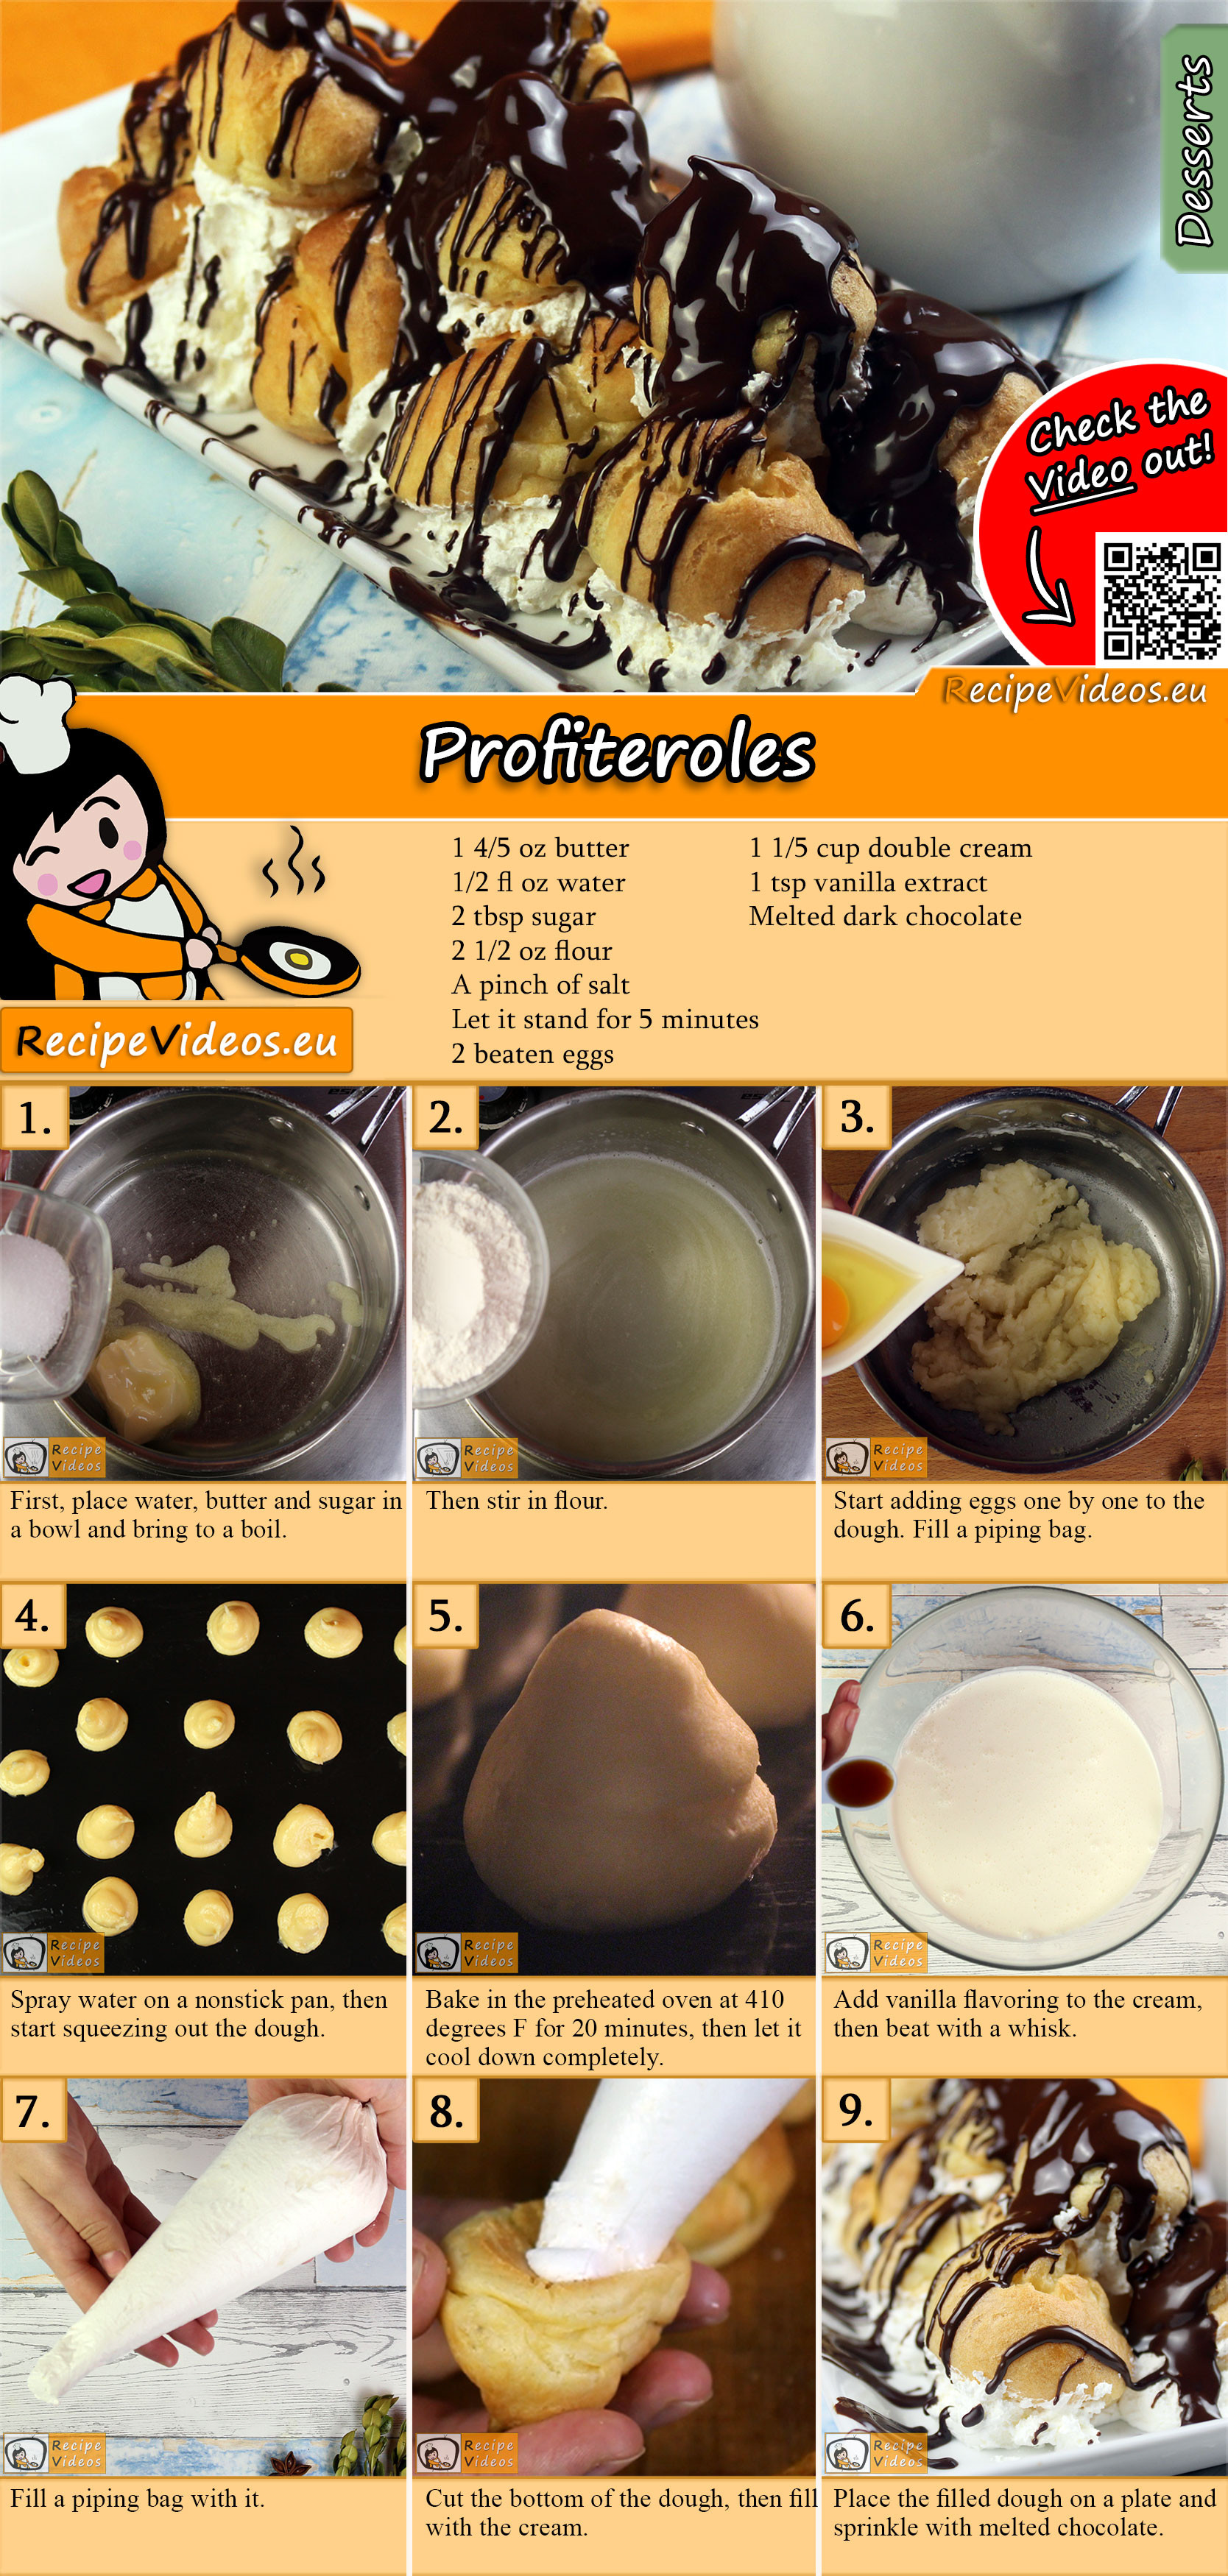 Profiteroles recipe with video